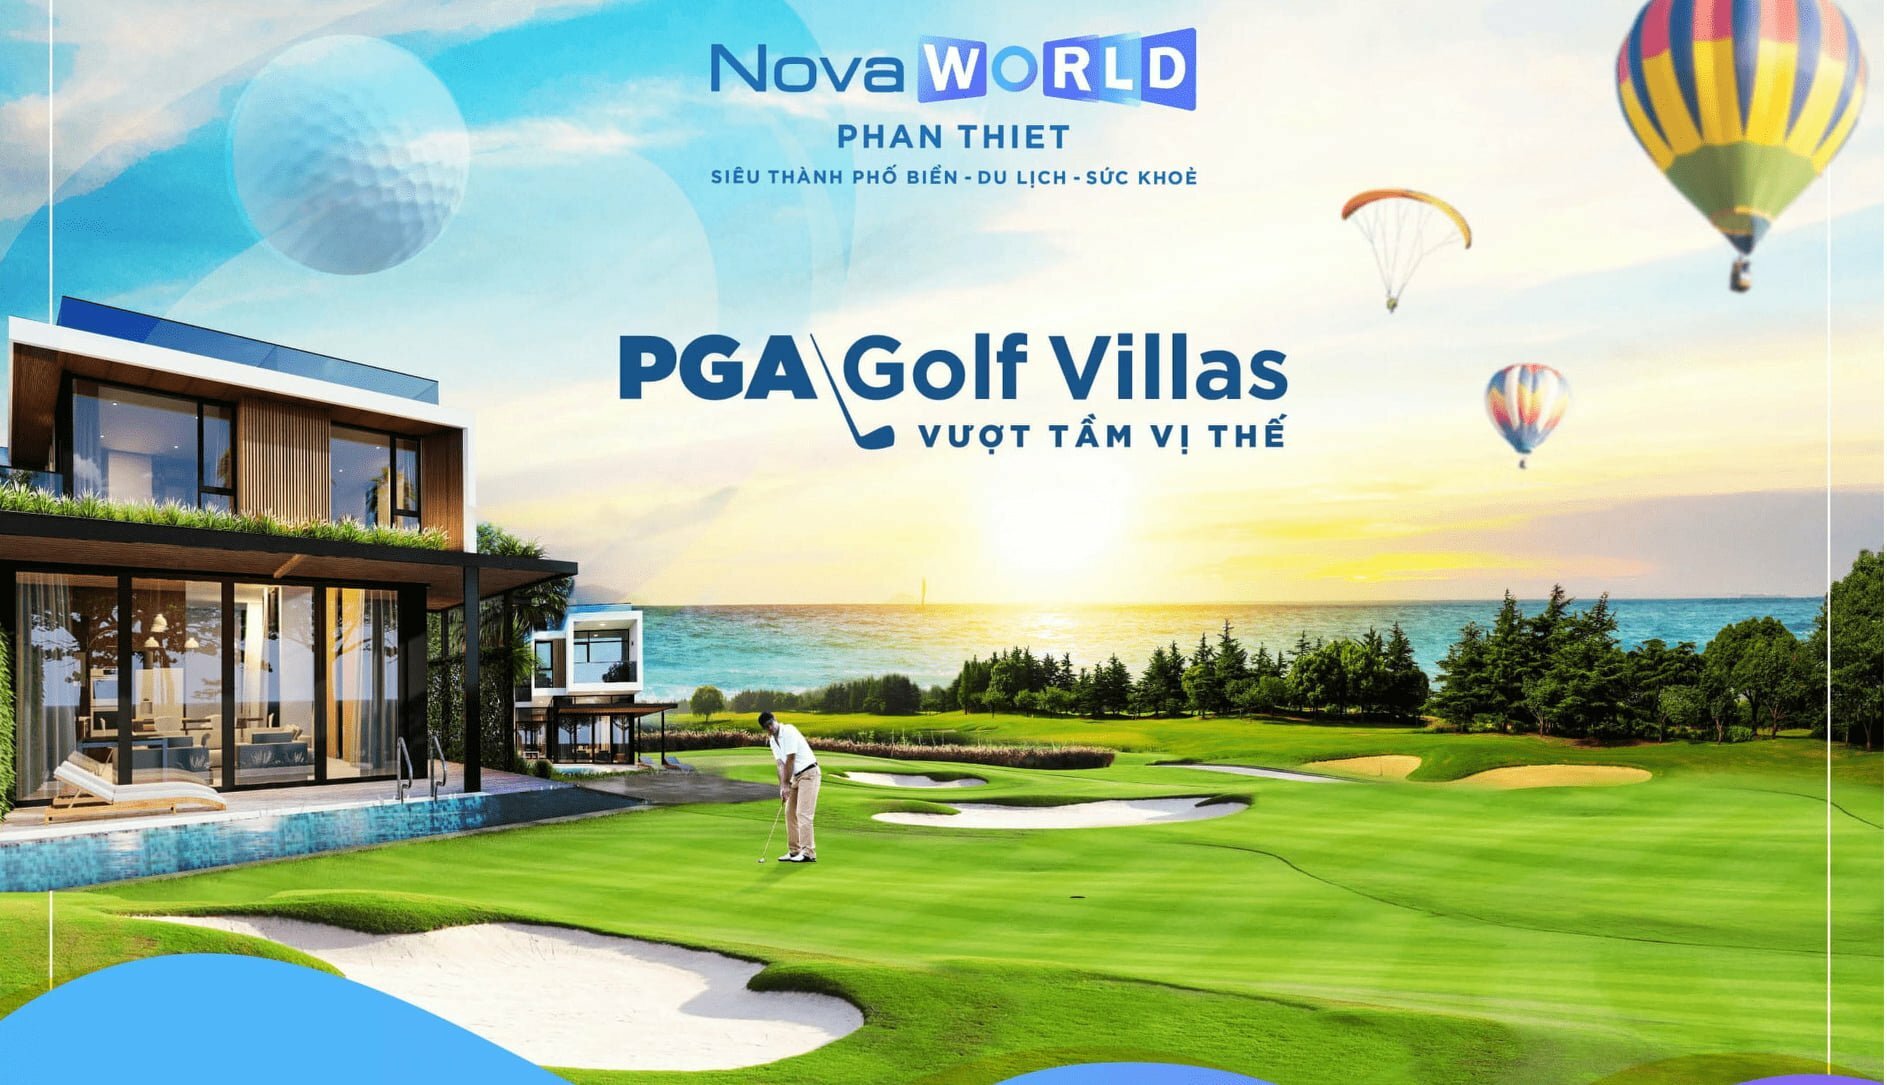 Golf Villas - Novaworld Phan Thiết